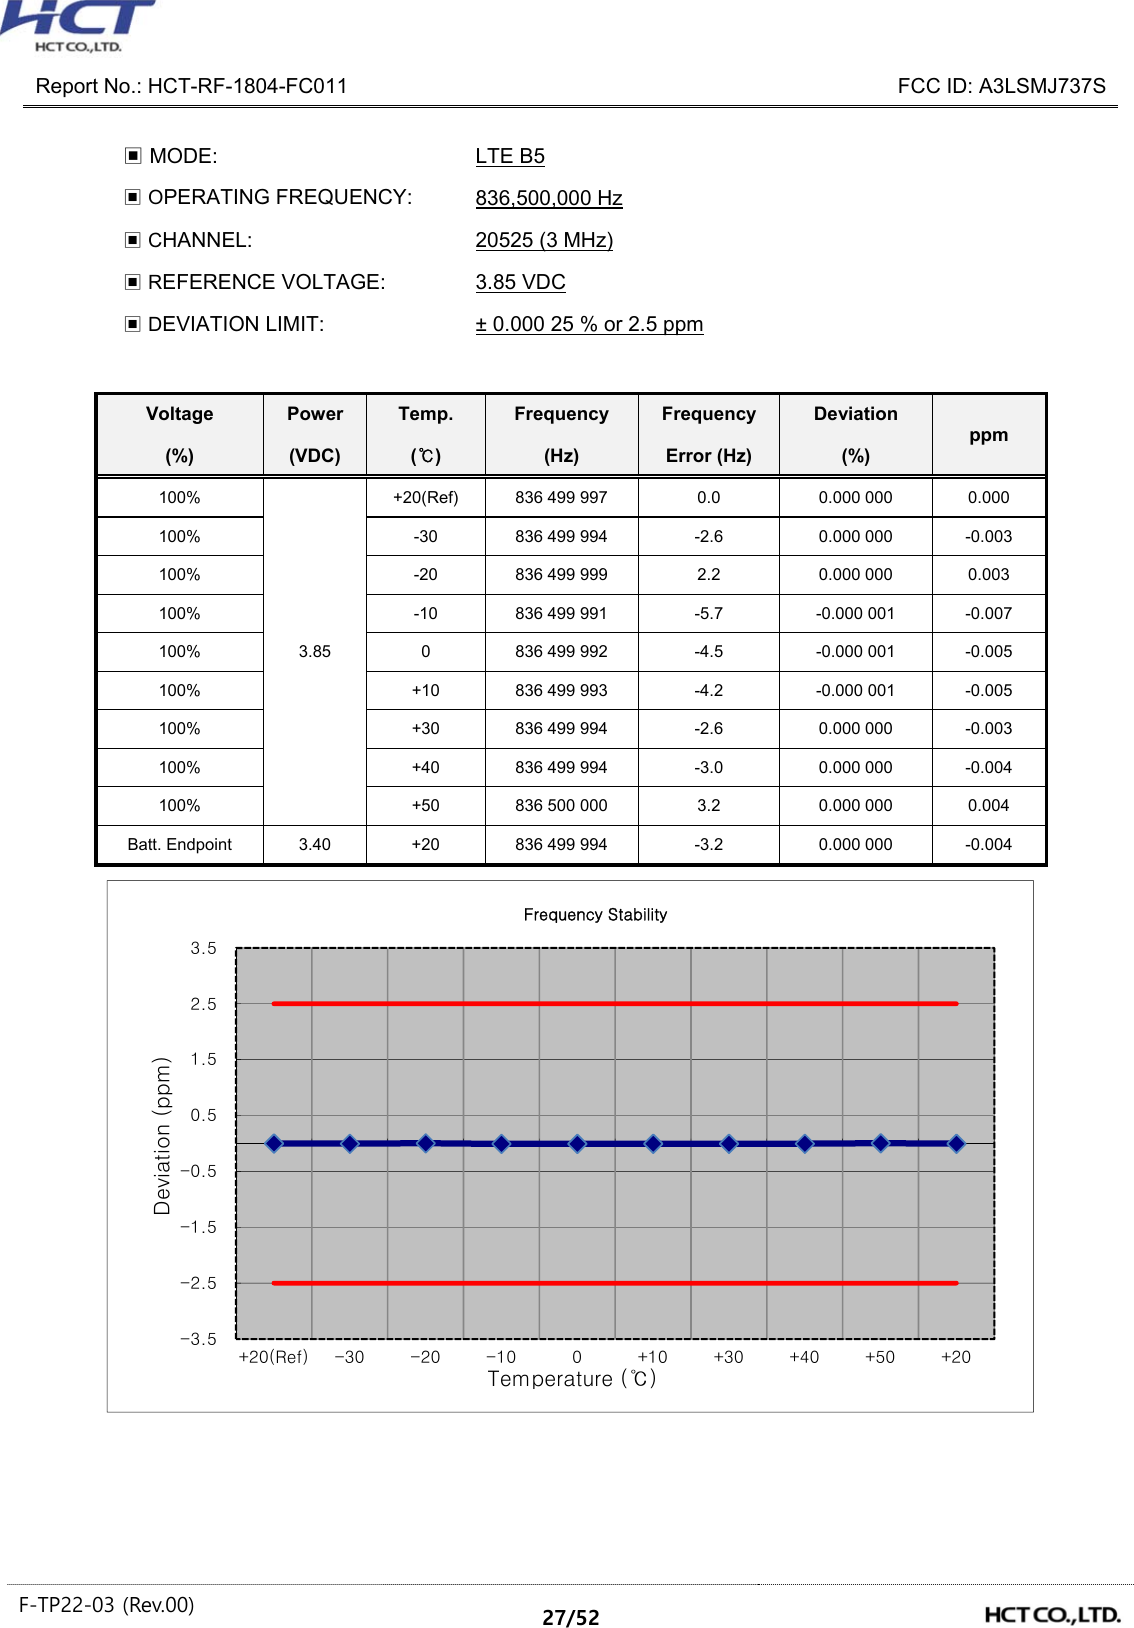  Report No.: HCT-RF-1804-FC011    FCC ID: A3LSMJ737S F-TP22-03 (Rev.00)  27/52  ▣ MODE:  LTE B5 ▣ OPERATING FREQUENCY: 836,500,000 Hz ▣ CHANNEL:    20525 (3 MHz) ▣ REFERENCE VOLTAGE: 3.85 VDC ▣ DEVIATION LIMIT: ± 0.000 25 % or 2.5 ppm        -3.5-2.5-1.5-0.50.51.52.53.5+20(Ref) -30 -20 -10 0 +10 +30 +40 +50 +20Deviation (ppm)Temperature (℃)Frequency StabilityVoltage    Power  Temp.  Frequency  Frequency  Deviation ppm (%)  (VDC)  (℃)  (Hz)  Error (Hz)  (%) 100% 3.85 +20(Ref)  836 499 997  0.0    0.000 000  0.000   100% -30 836 499 994  -2.6    0.000 000  -0.003   100% -20 836 499 999  2.2    0.000 000  0.003   100% -10 836 499 991  -5.7    -0.000 001  -0.007   100% 0 836 499 992  -4.5    -0.000 001  -0.005   100% +10 836 499 993  -4.2    -0.000 001  -0.005   100% +30 836 499 994  -2.6    0.000 000  -0.003   100% +40 836 499 994  -3.0    0.000 000  -0.004   100% +50 836 500 000  3.2    0.000 000  0.004   Batt. Endpoint  3.40  +20  836 499 994  -3.2    0.000 000  -0.004   